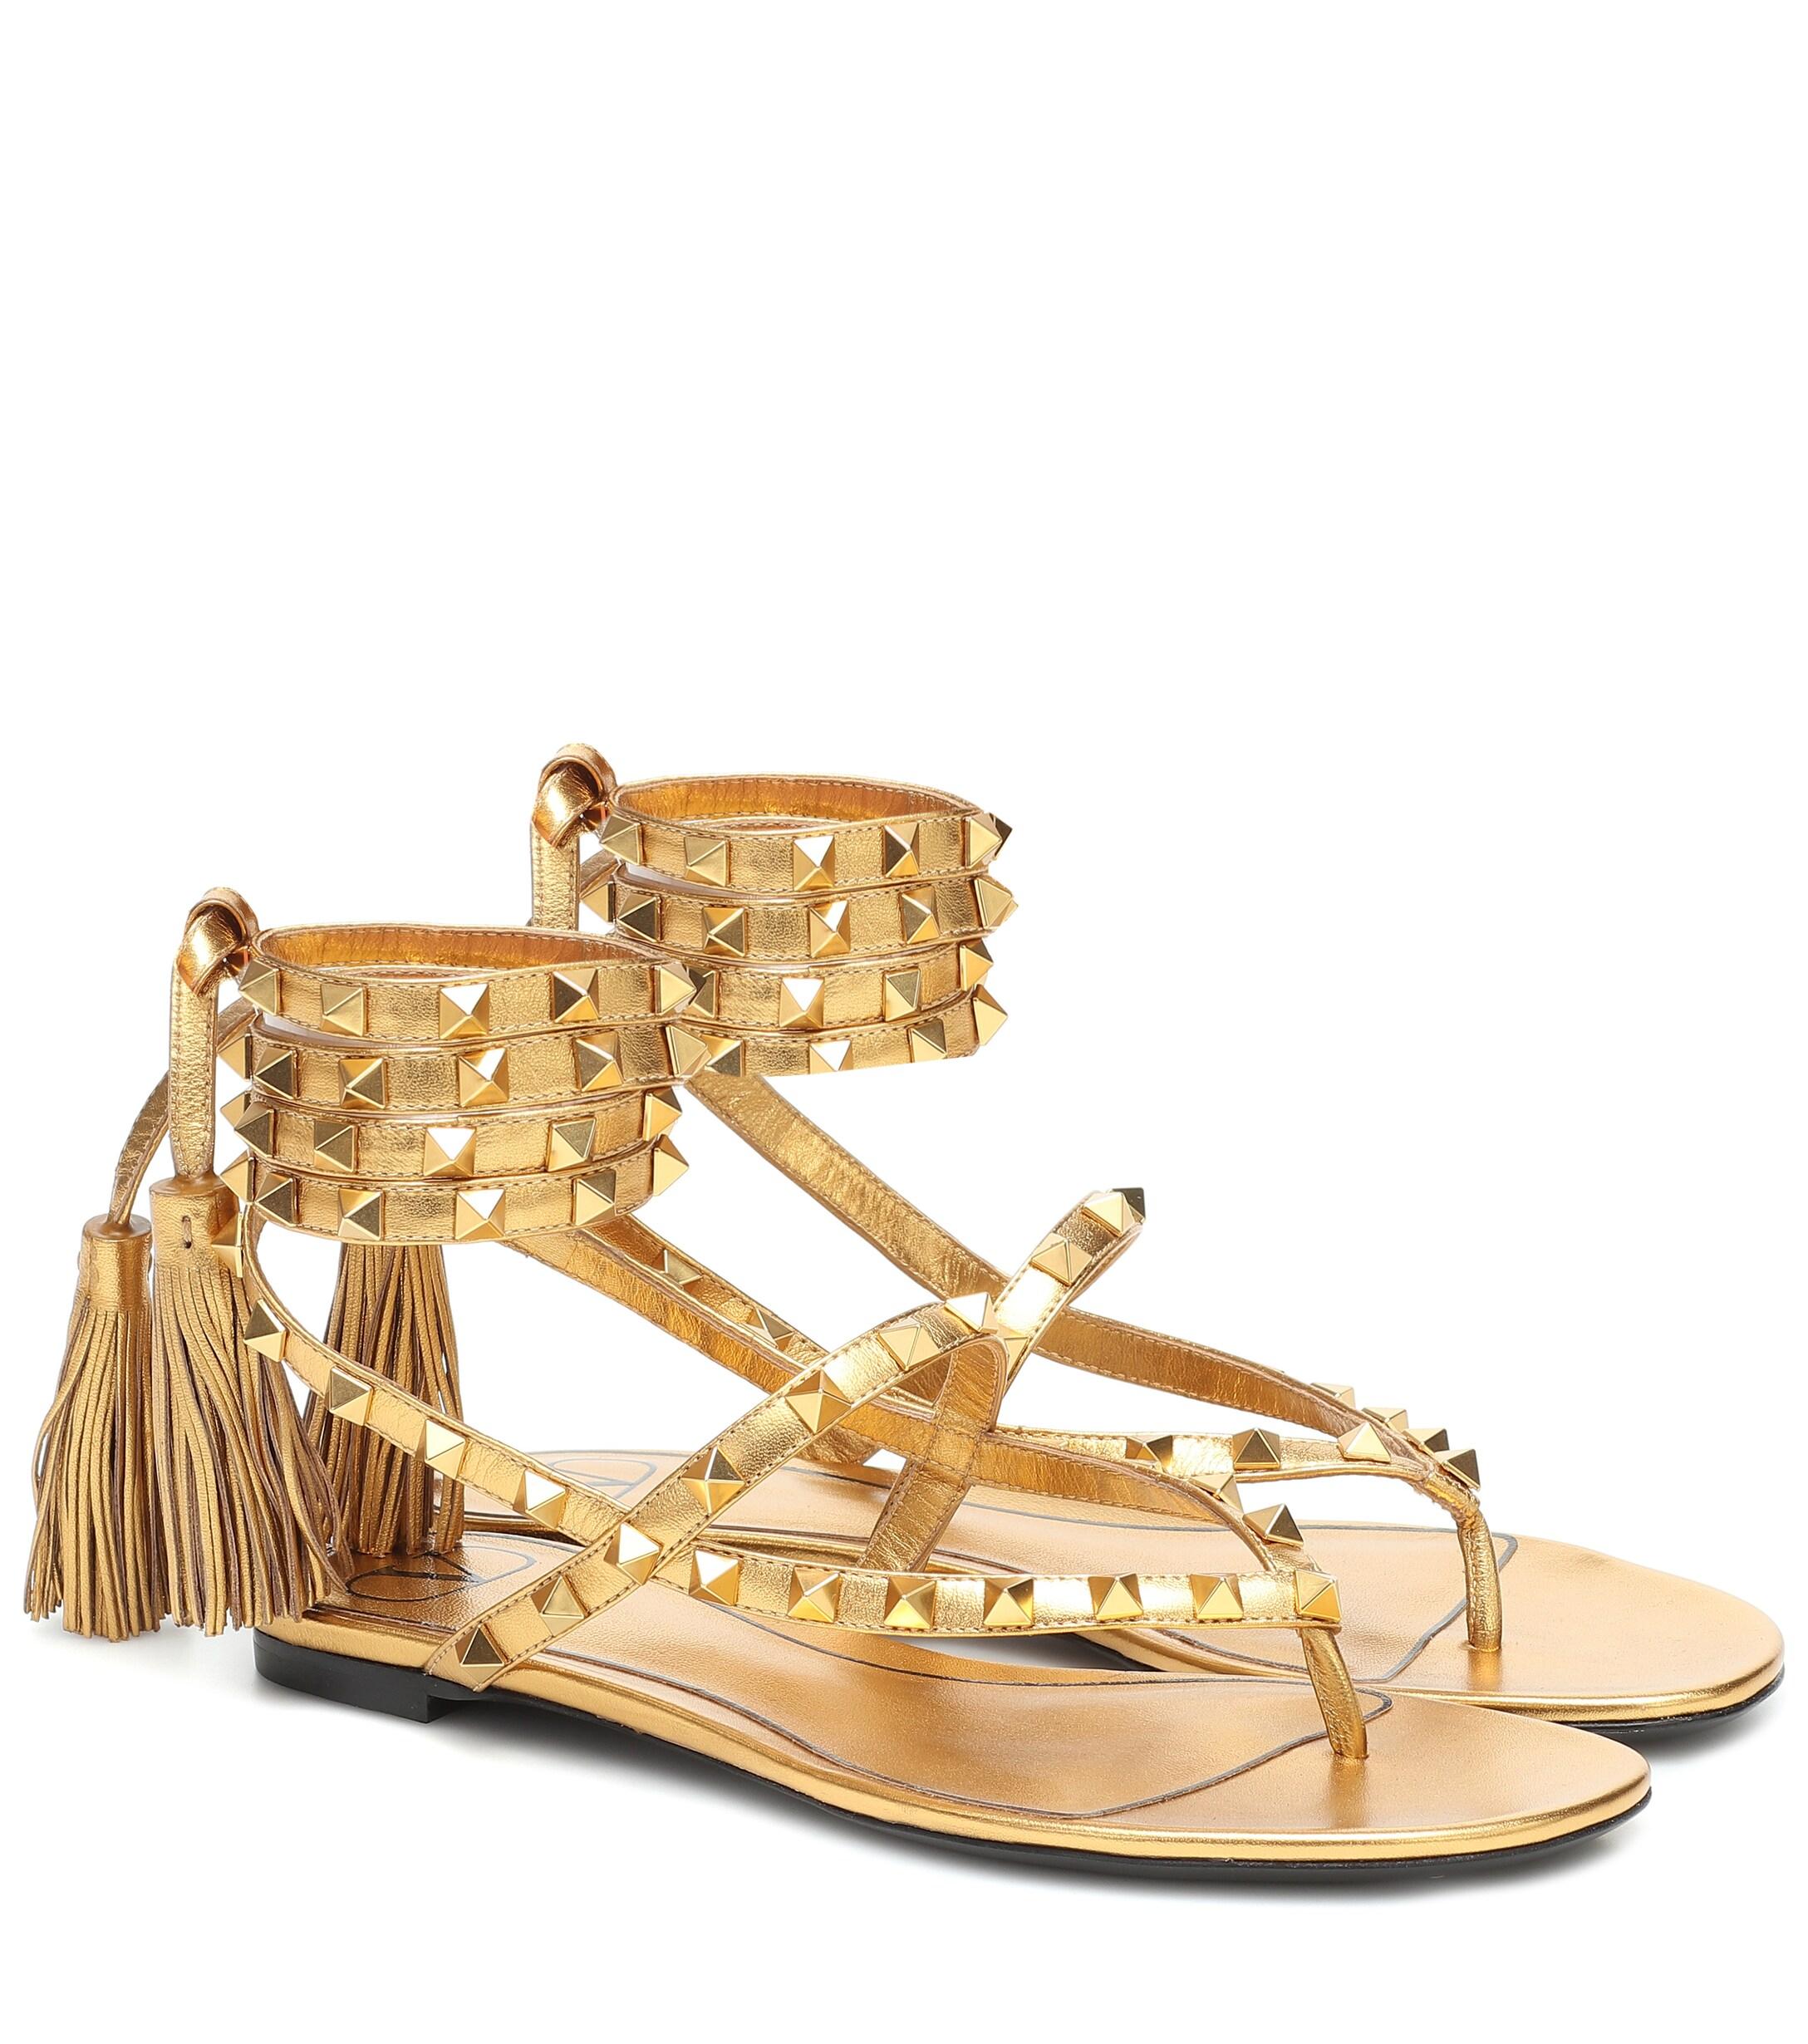 Valentino Garavani Rockstud Flair Leather Sandals in Gold (Metallic) - Lyst